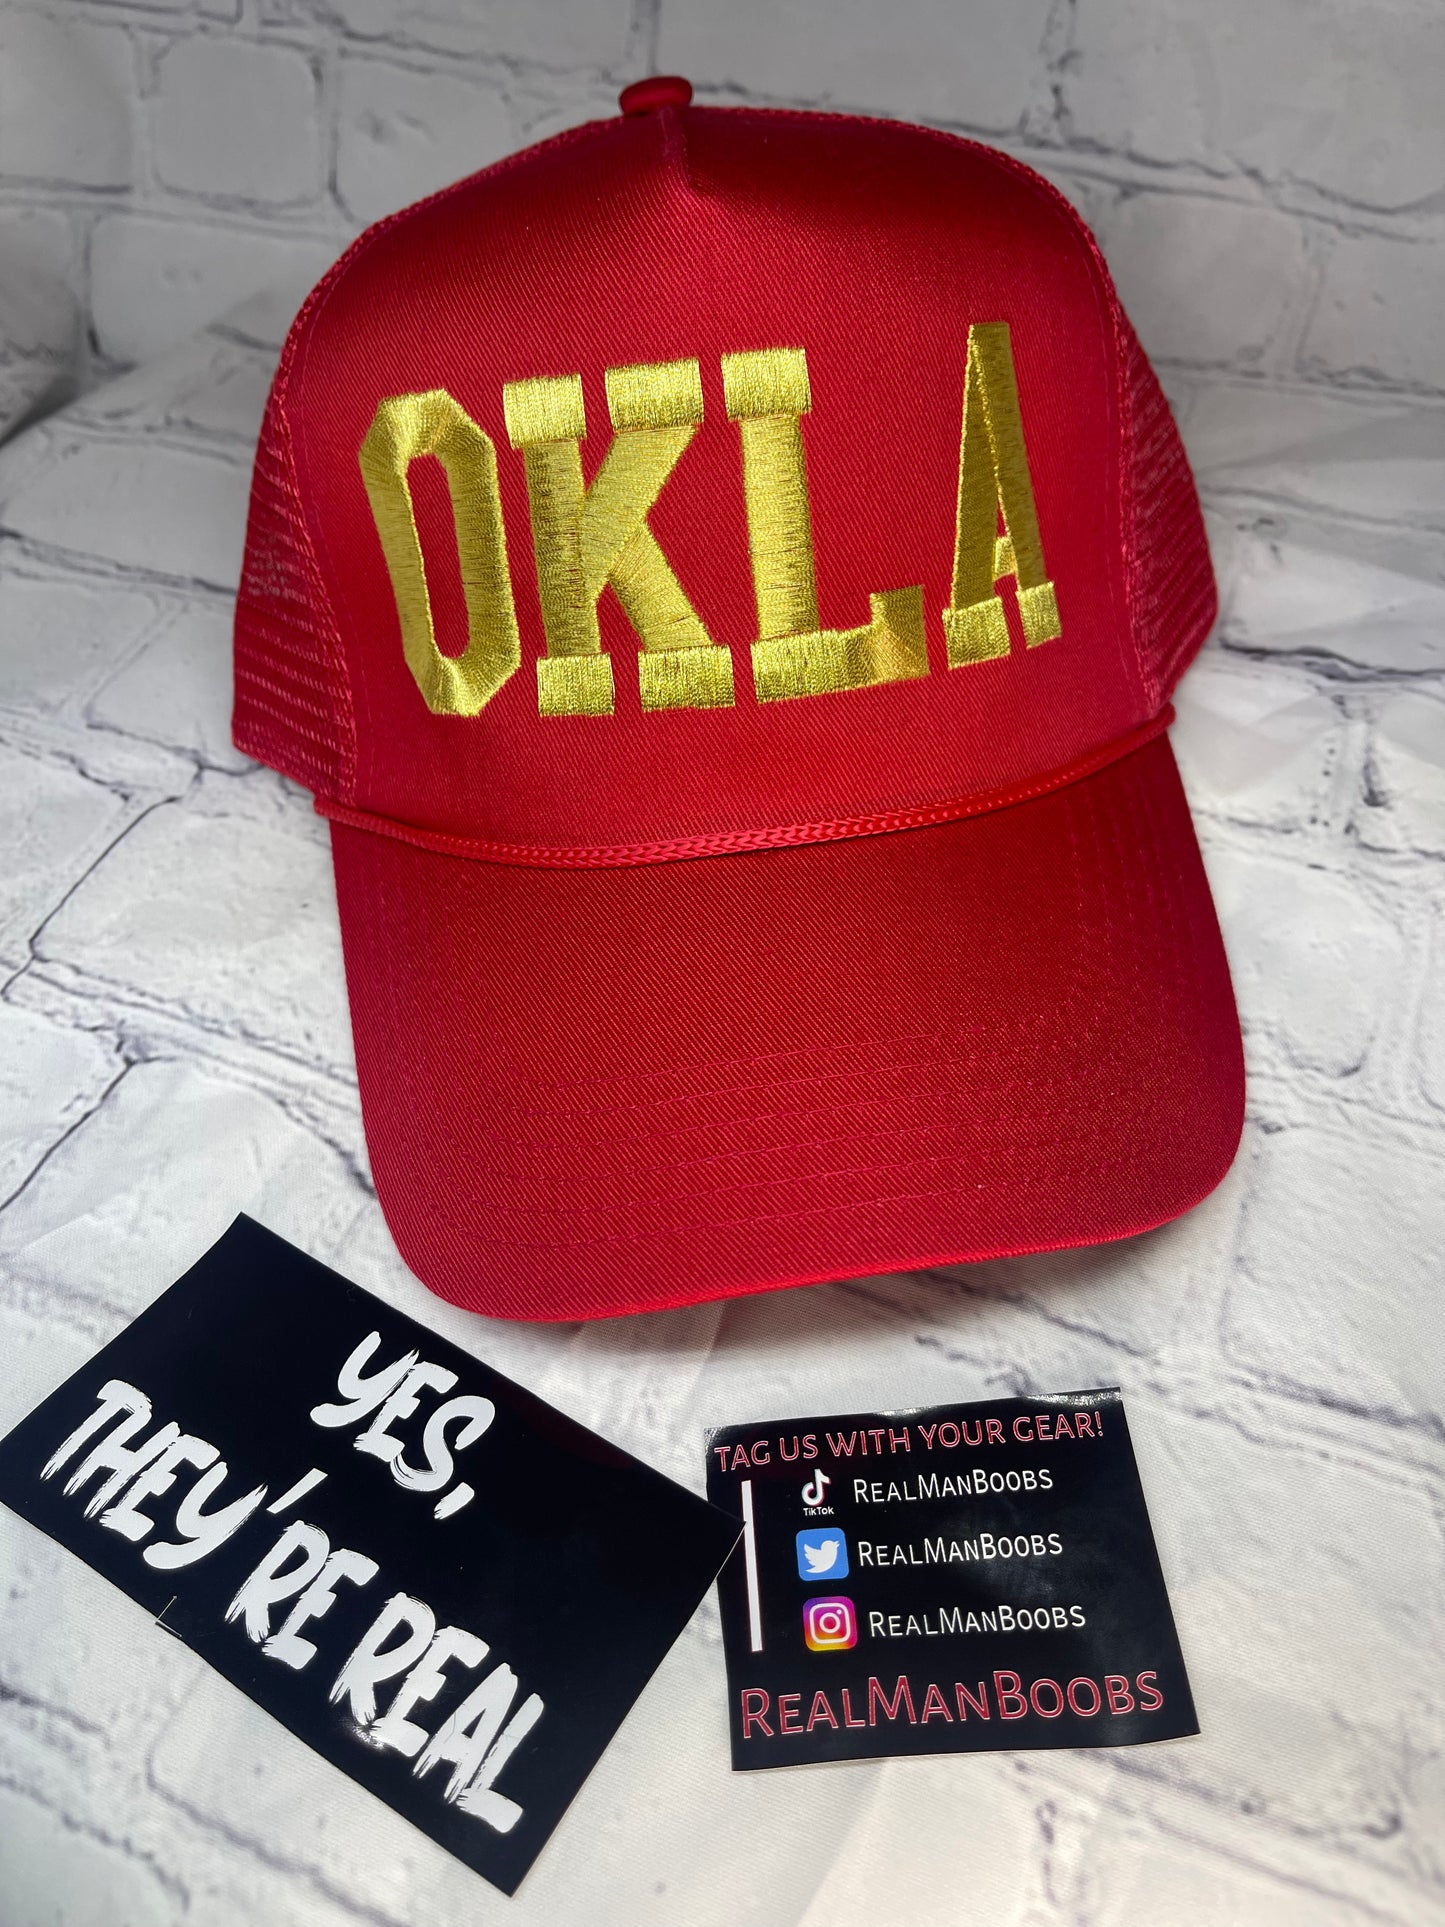 OKLA Gold Red trucker hat.